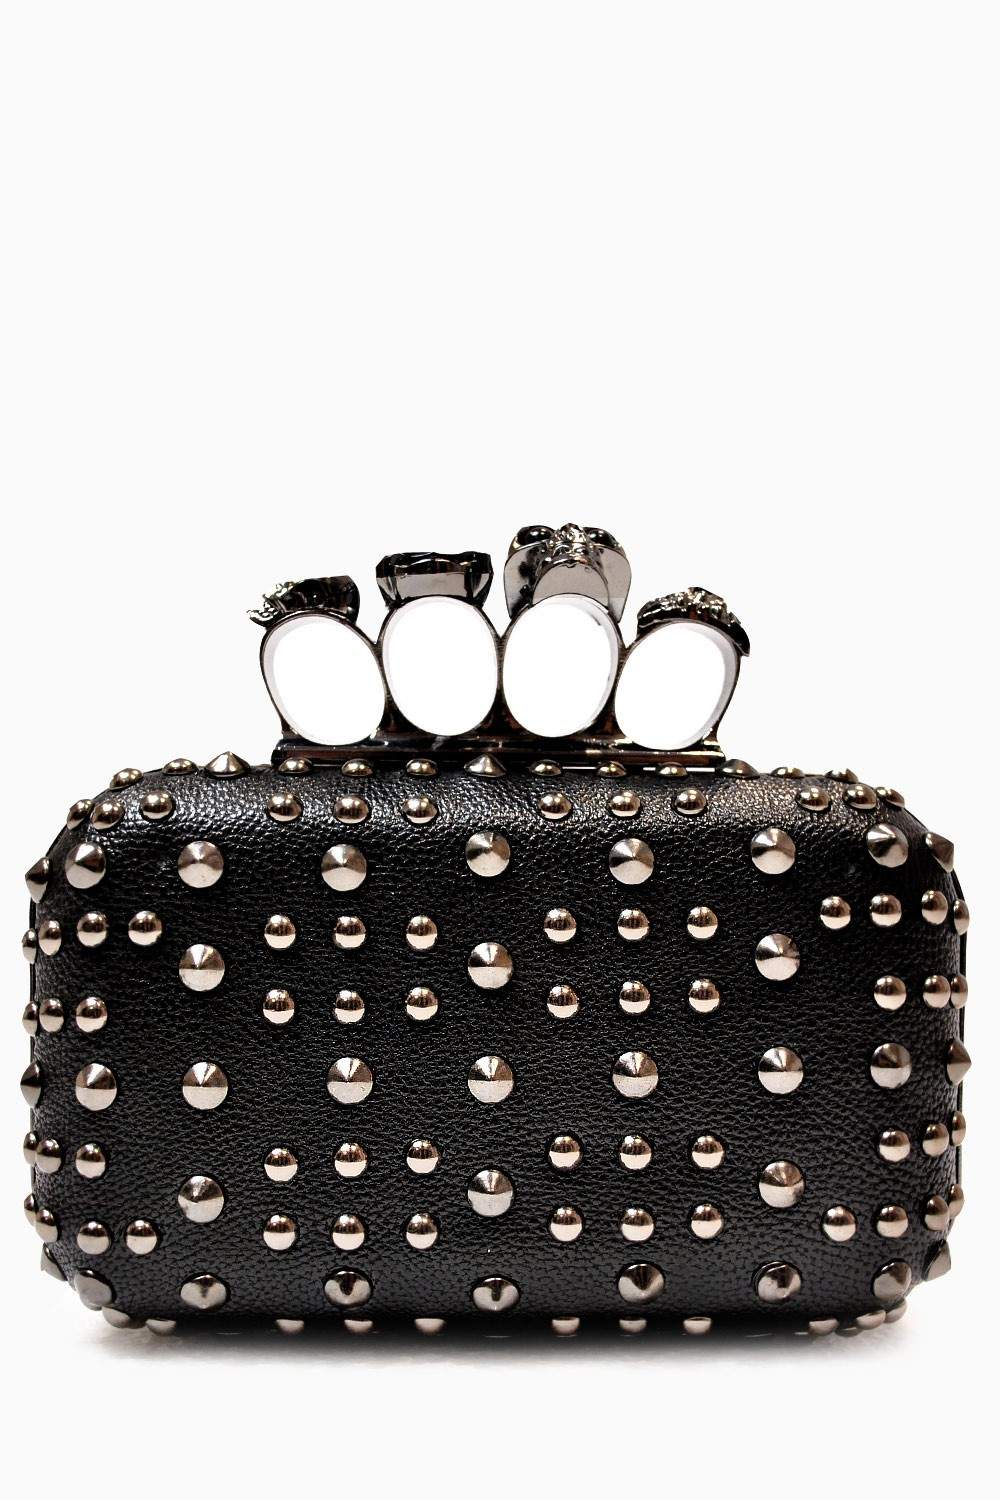 Tiffany Black Skull Knuckle Ring Clutch Bag | iCLOTHING